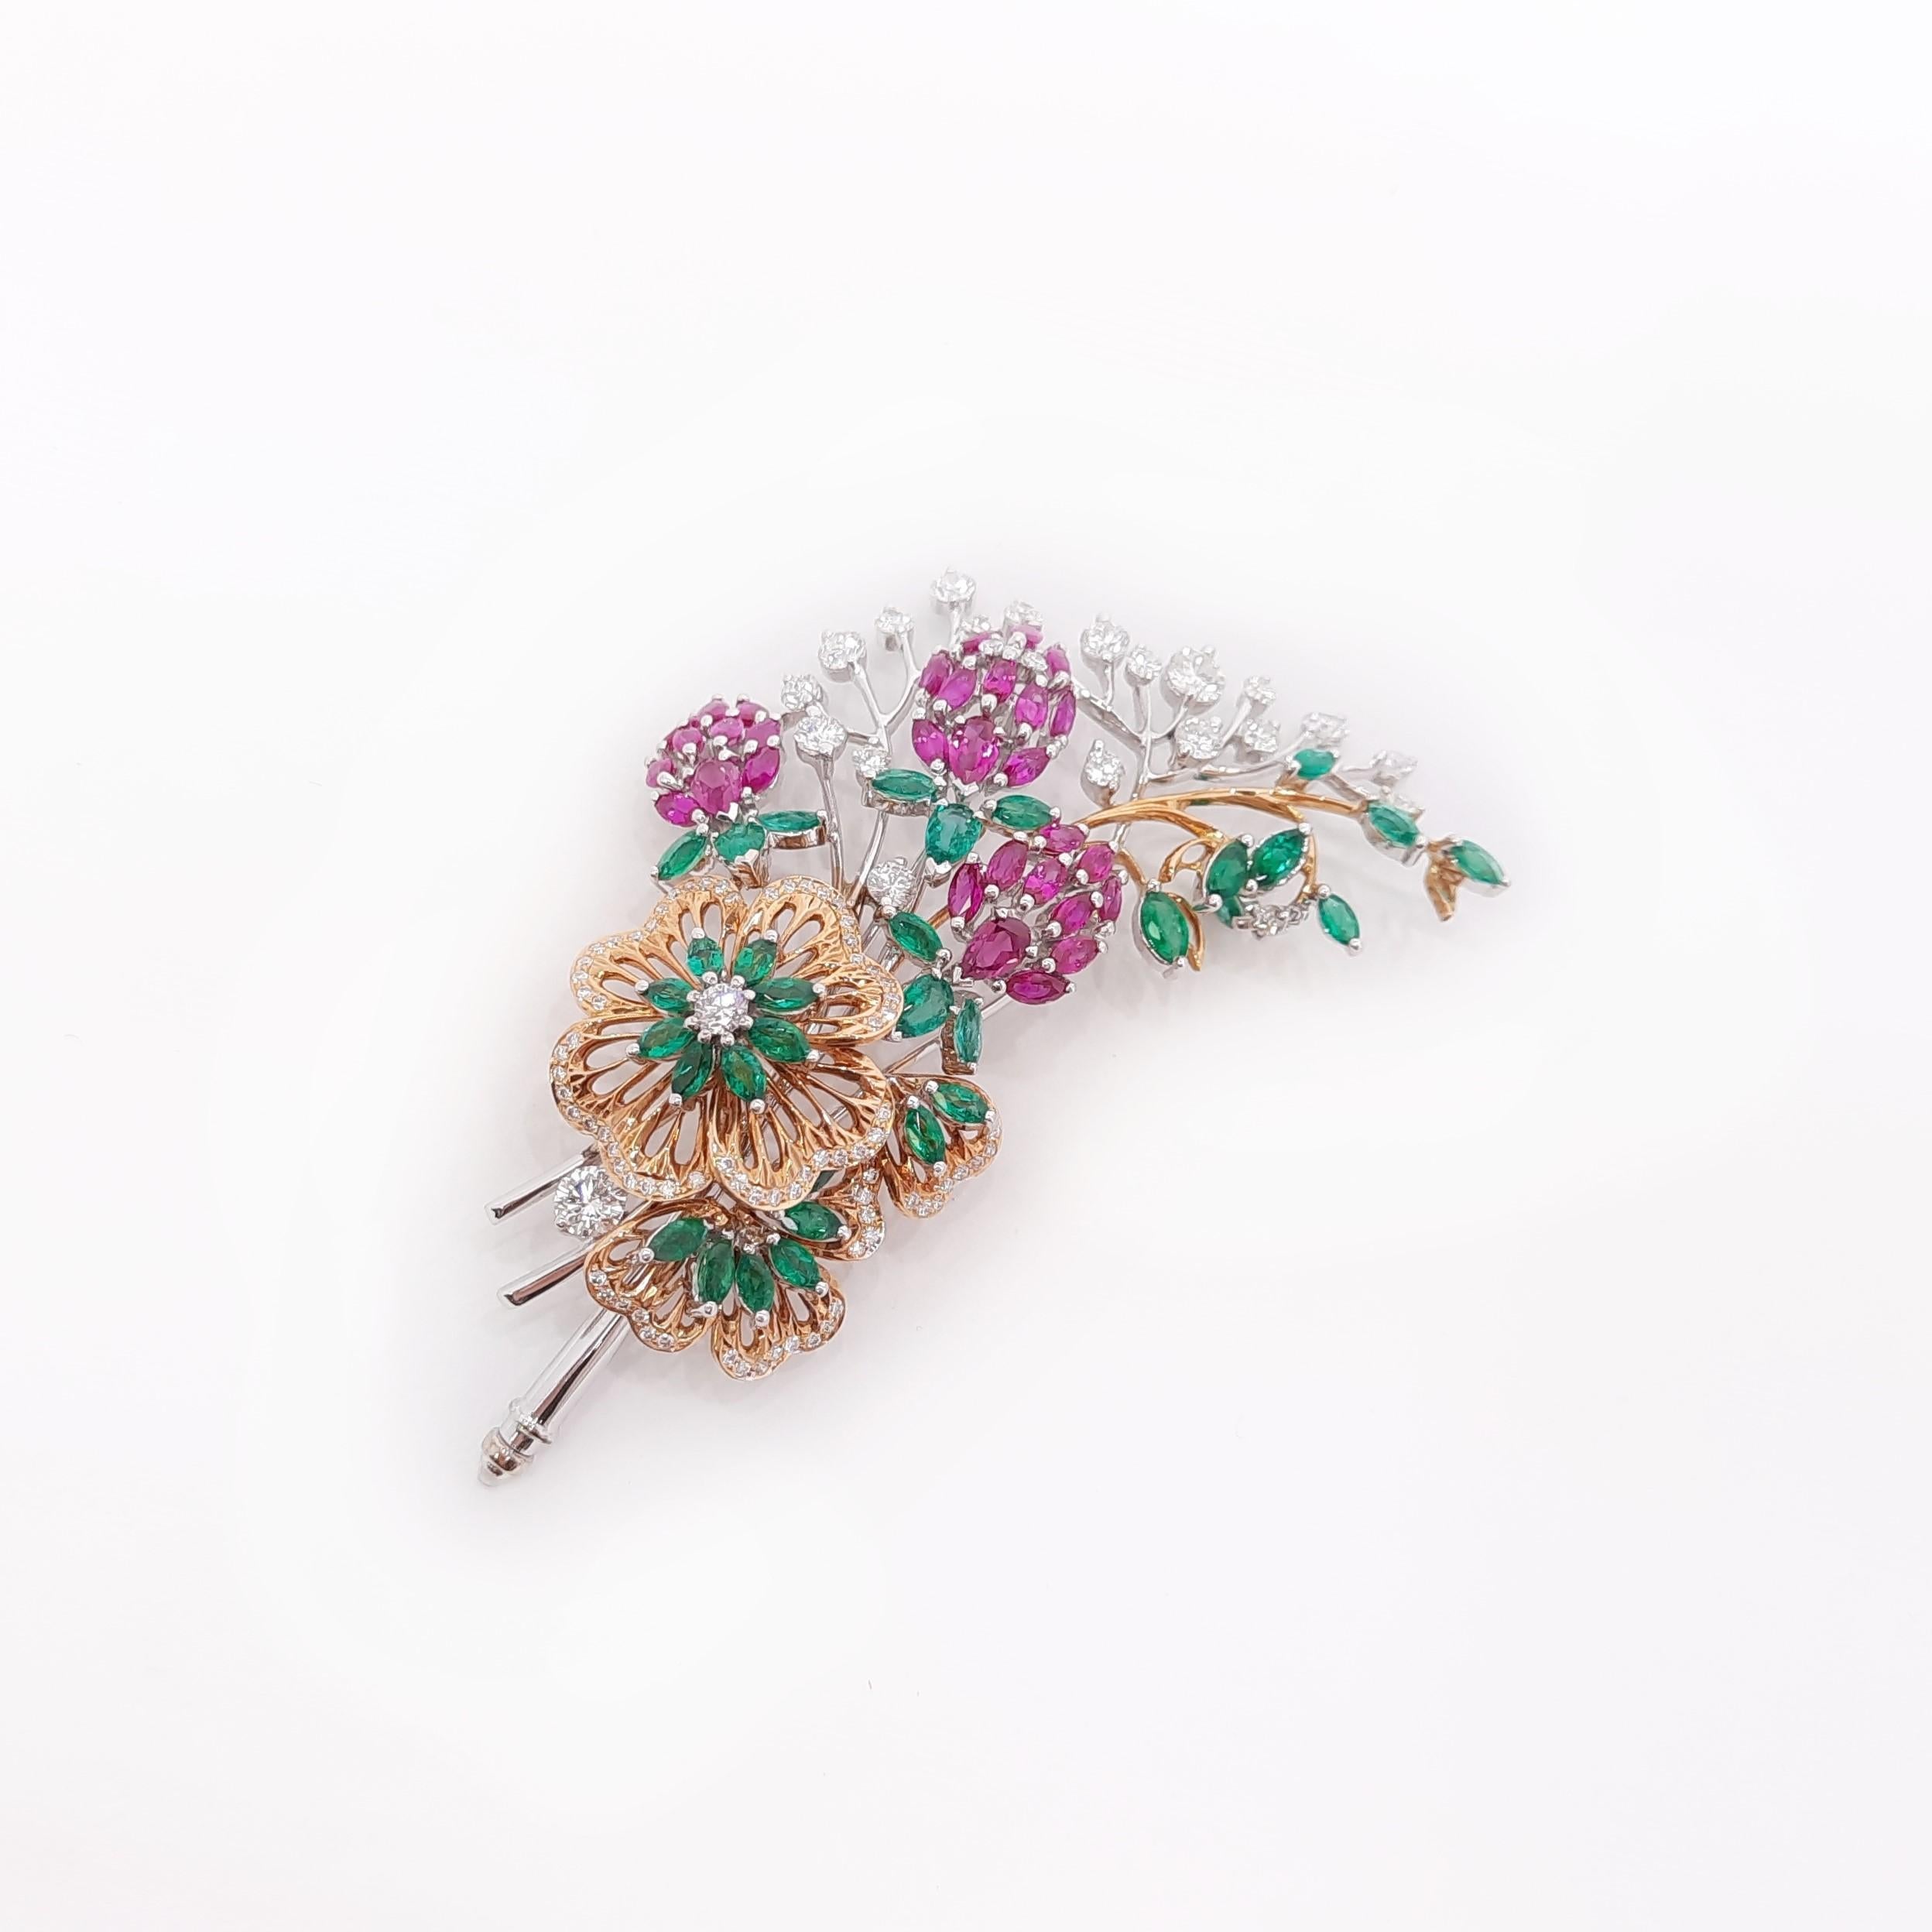 18K Gold Diamond Ruby Emerald Flower Bouquet Brooch, Handmade For Sale ...